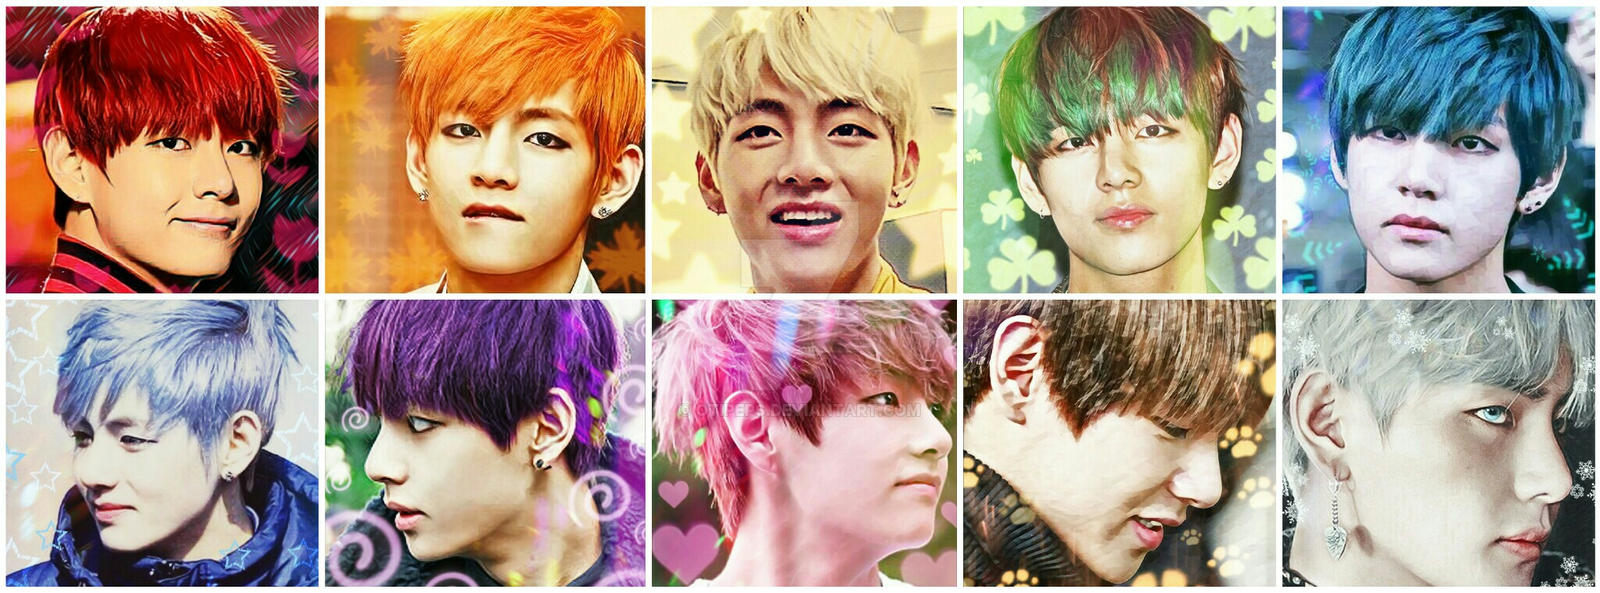 Bts Taehyung Rainbow Haircolors By Otipeps On Deviantart.